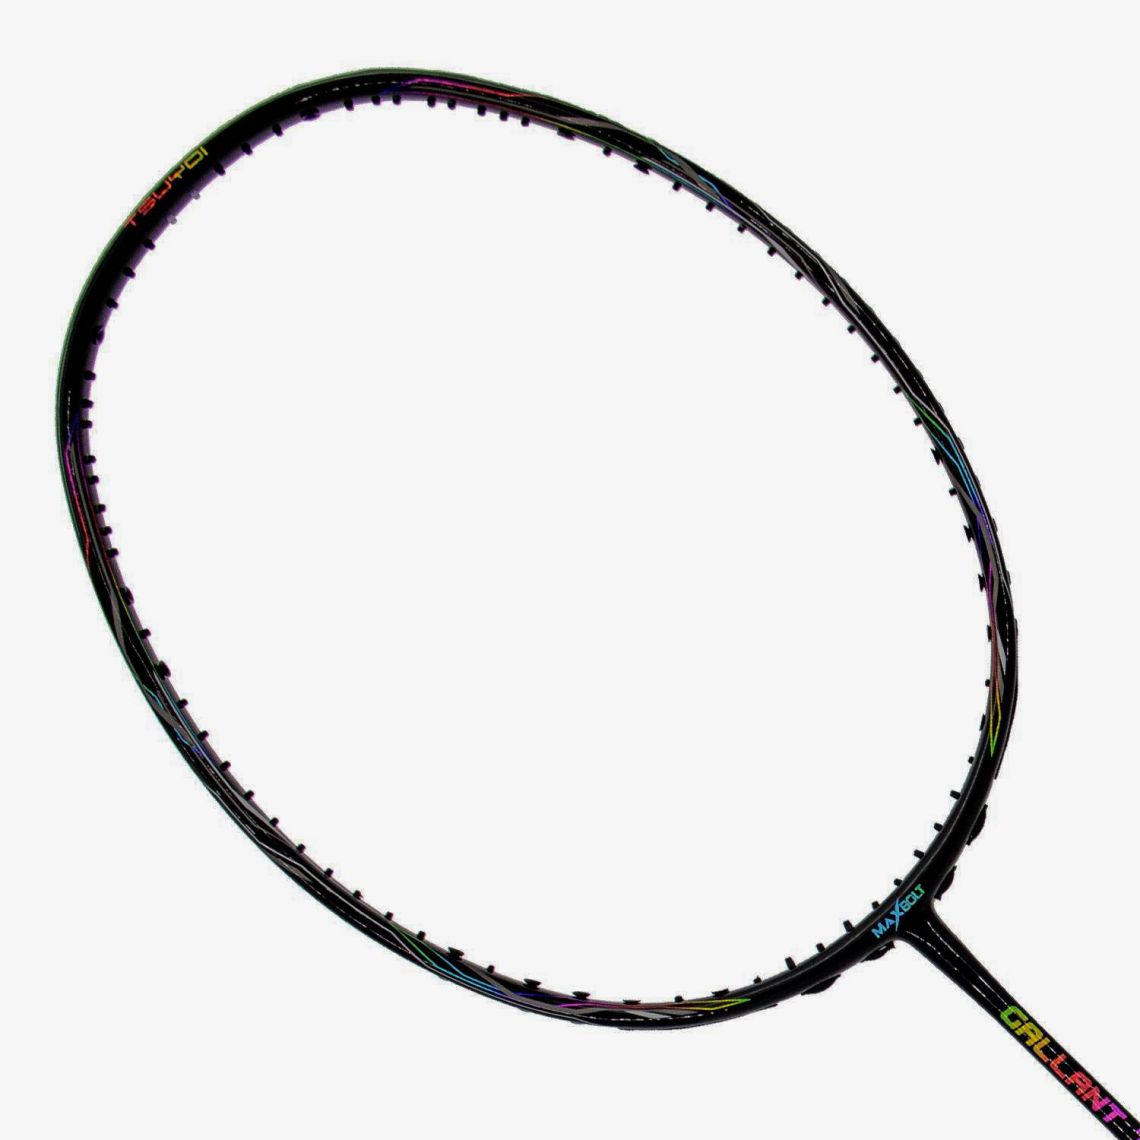 maxbolt gallant tour badminton racket review